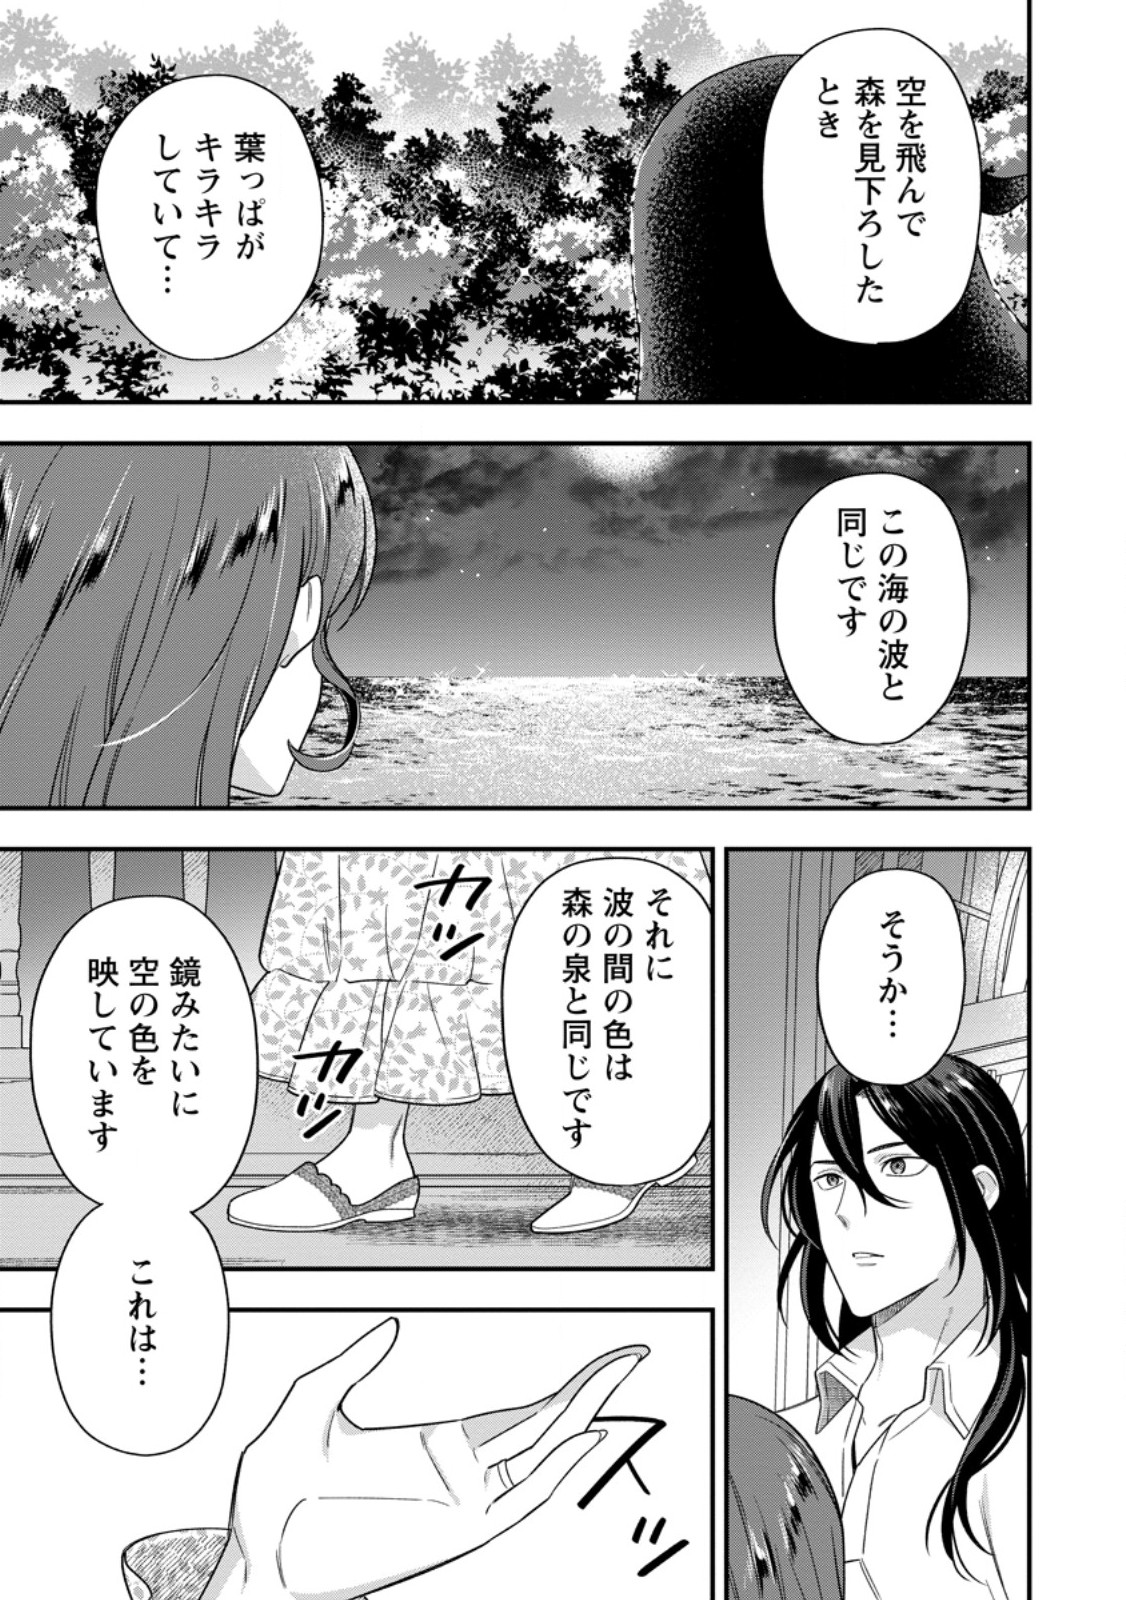 Aisanai to Iwaremashite mo - Chapter 14.2 - Page 1